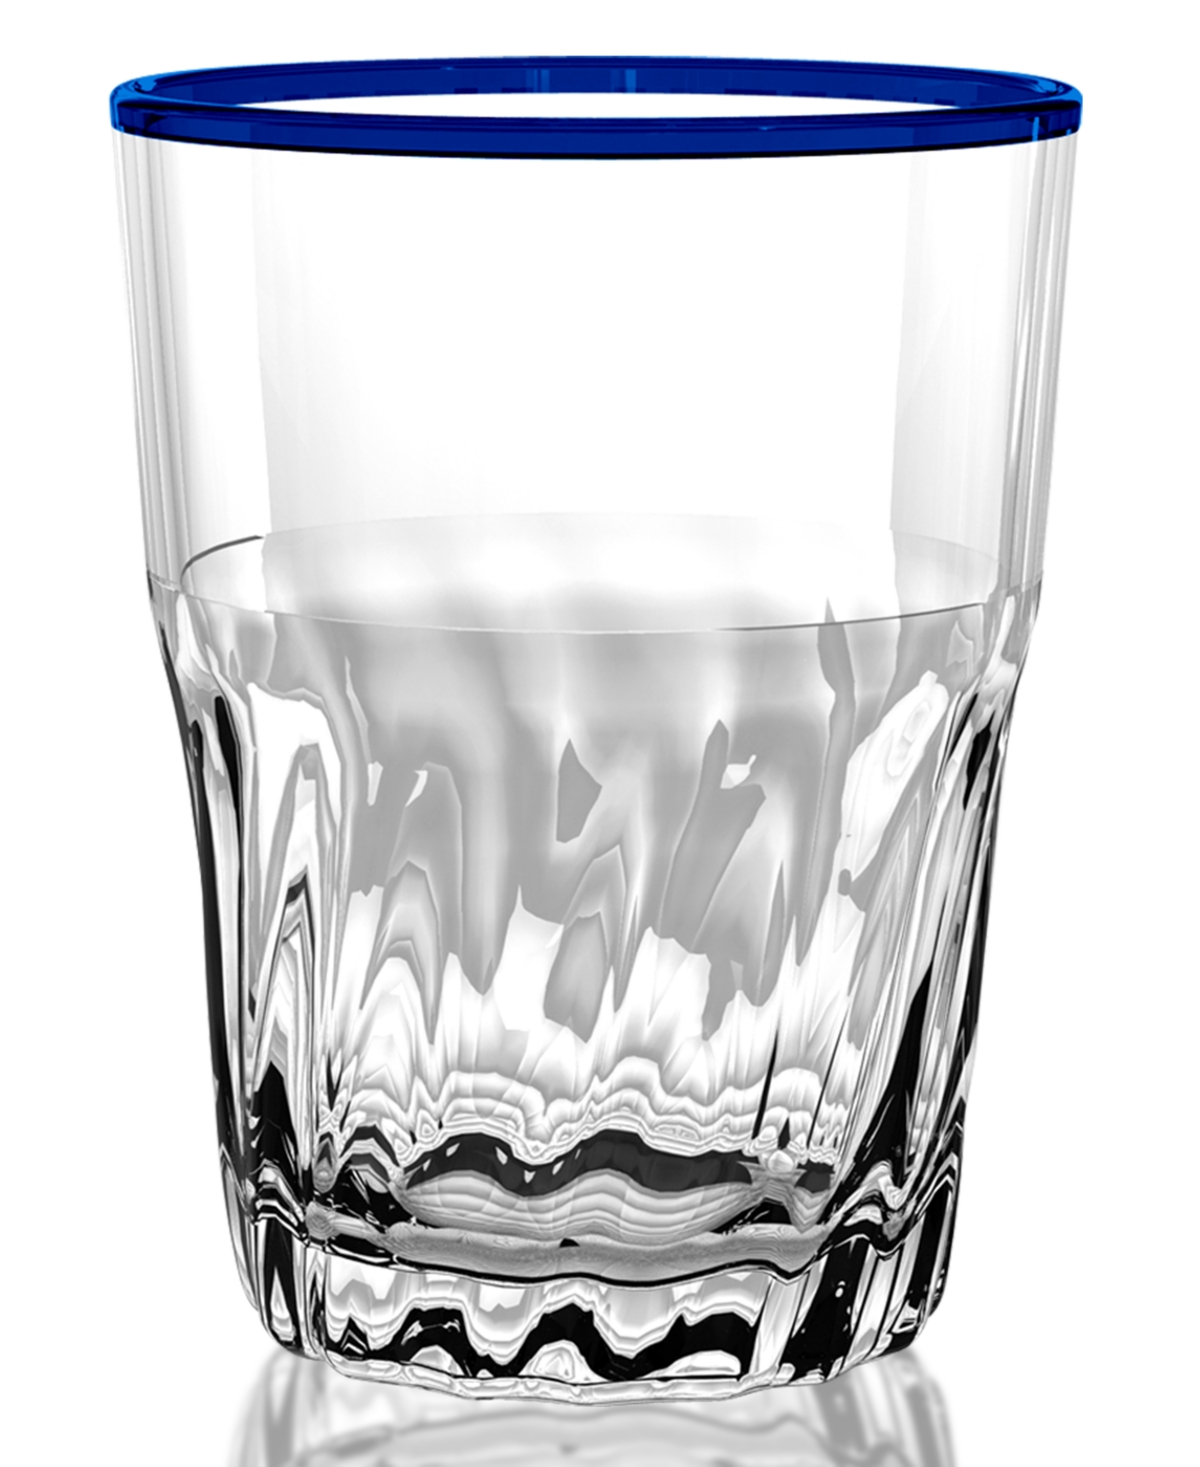 Cantina Double Old Fashion Glass, Blue, 15 oz., Premium Plastic, Set of 6 - Blue